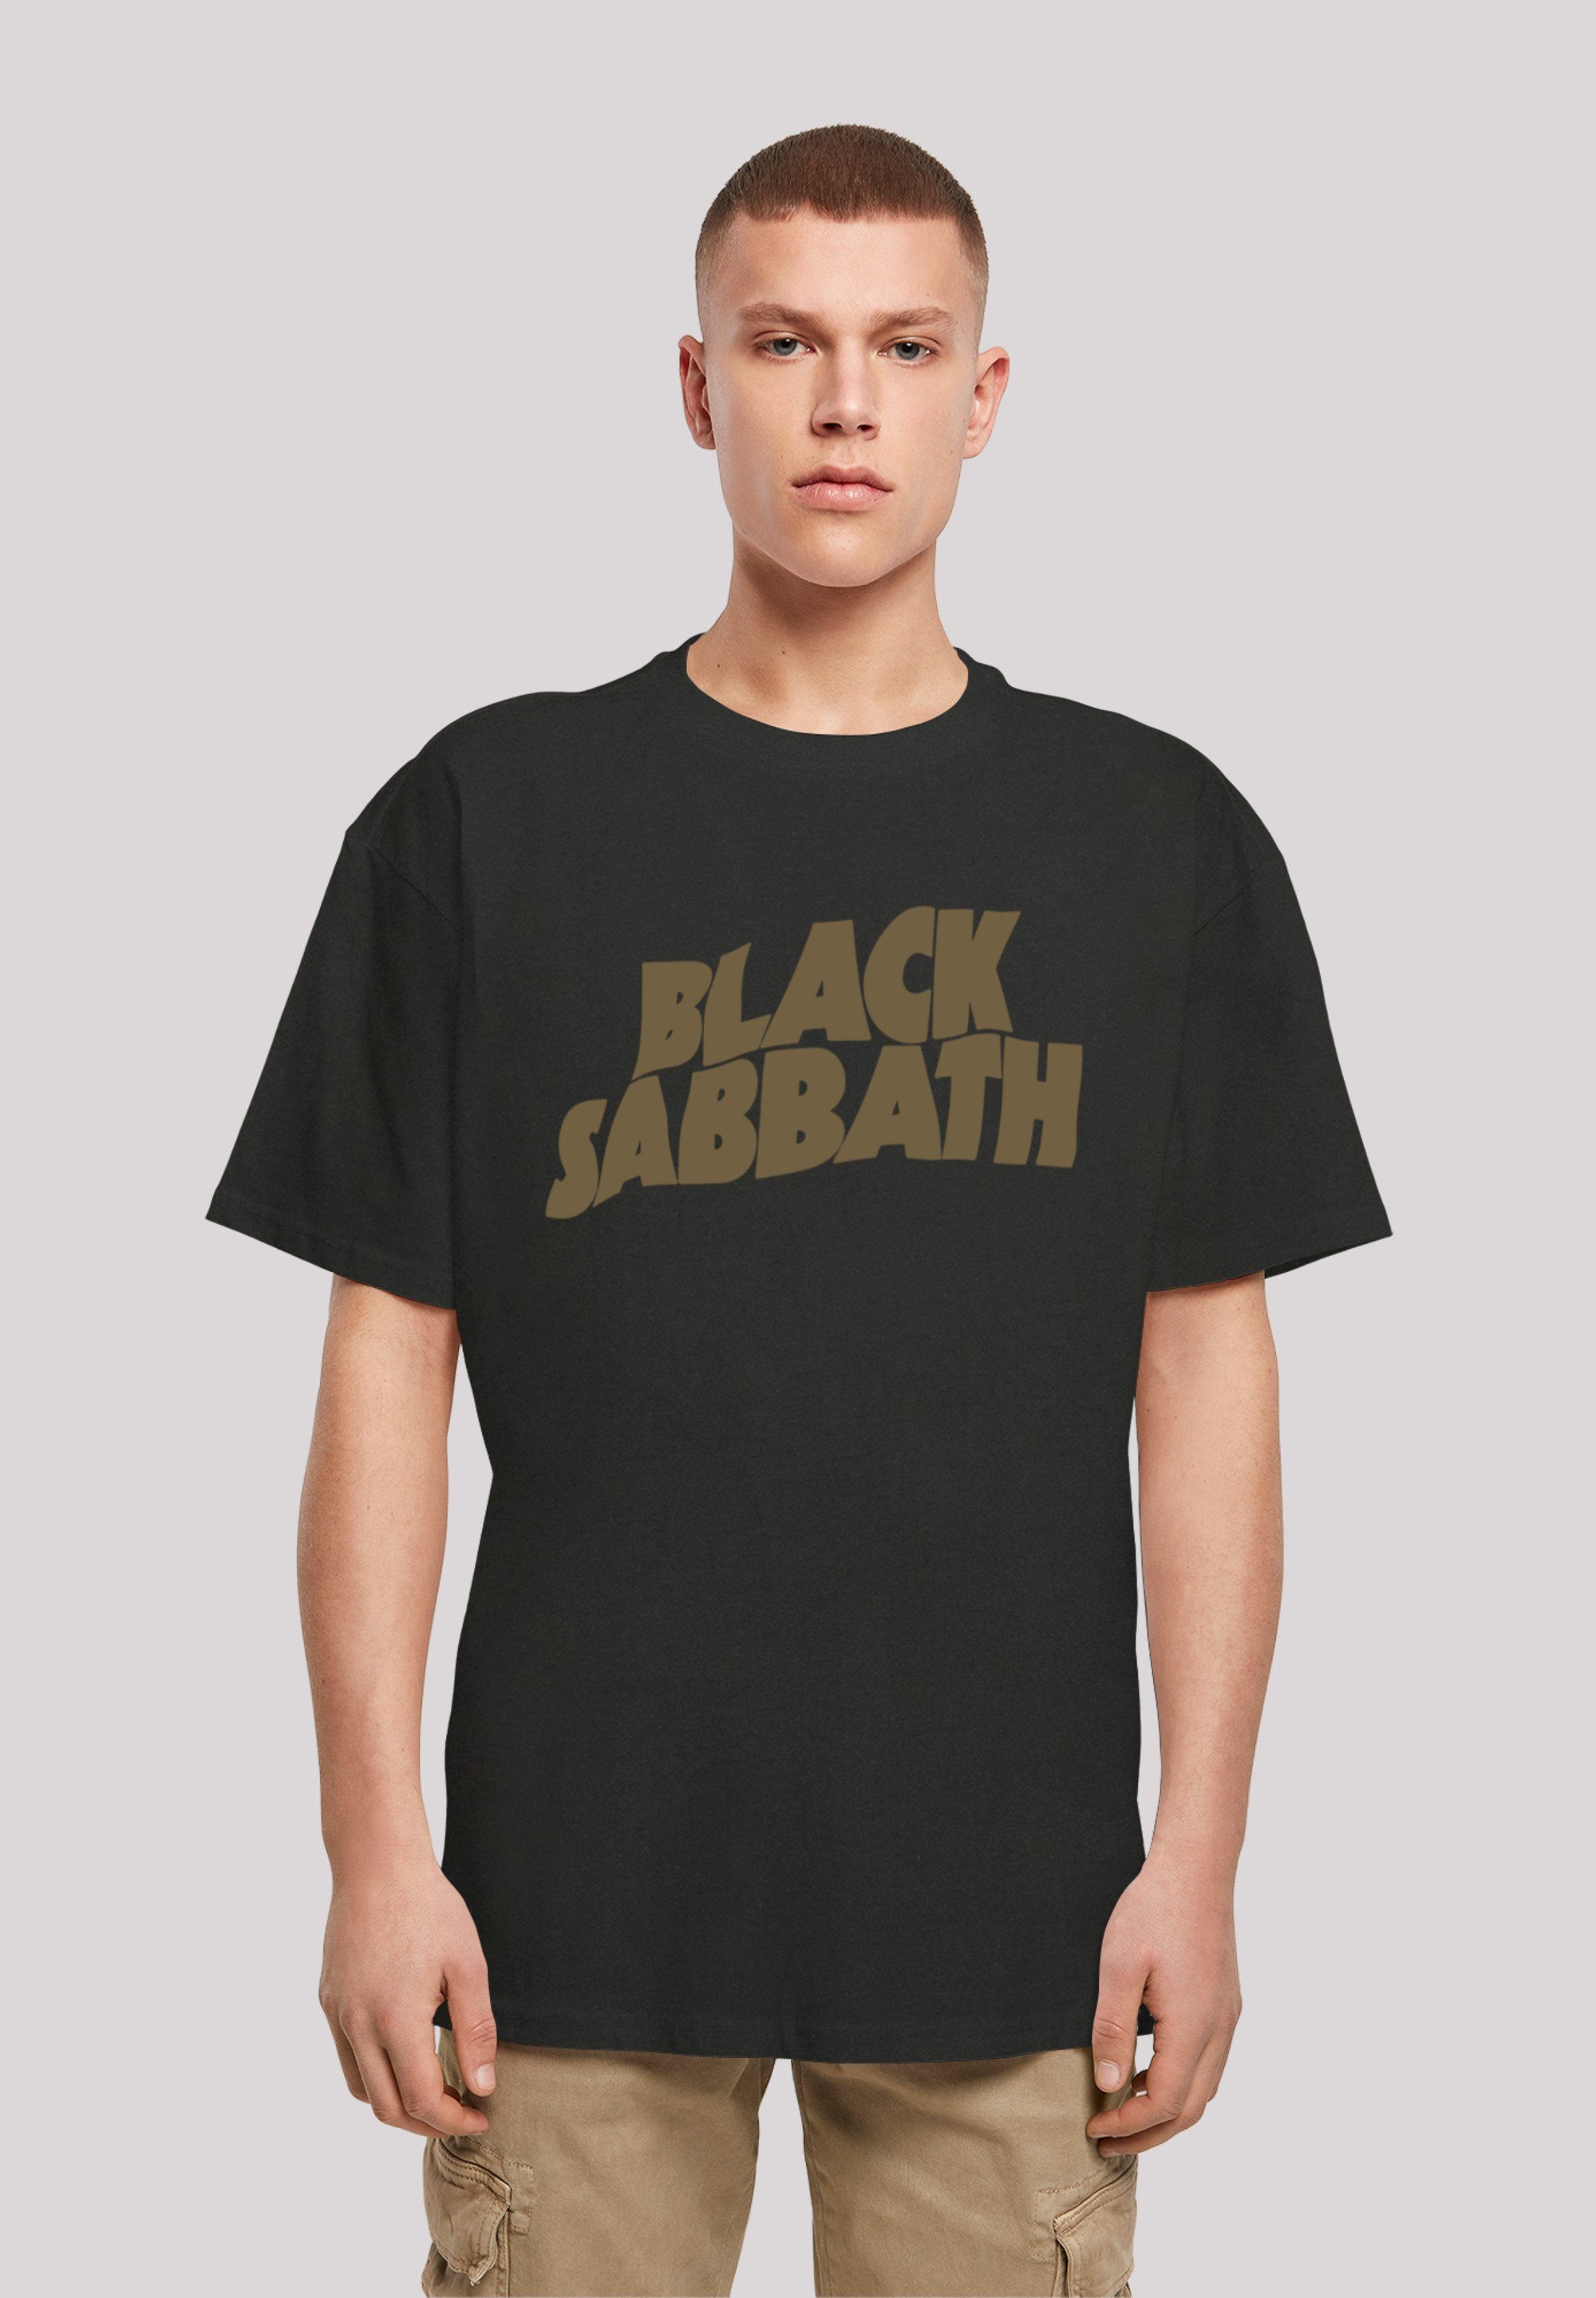 Metal Band F4NT4STIC Zip Black Sabbath US 1978 Black Tour T-Shirt Print